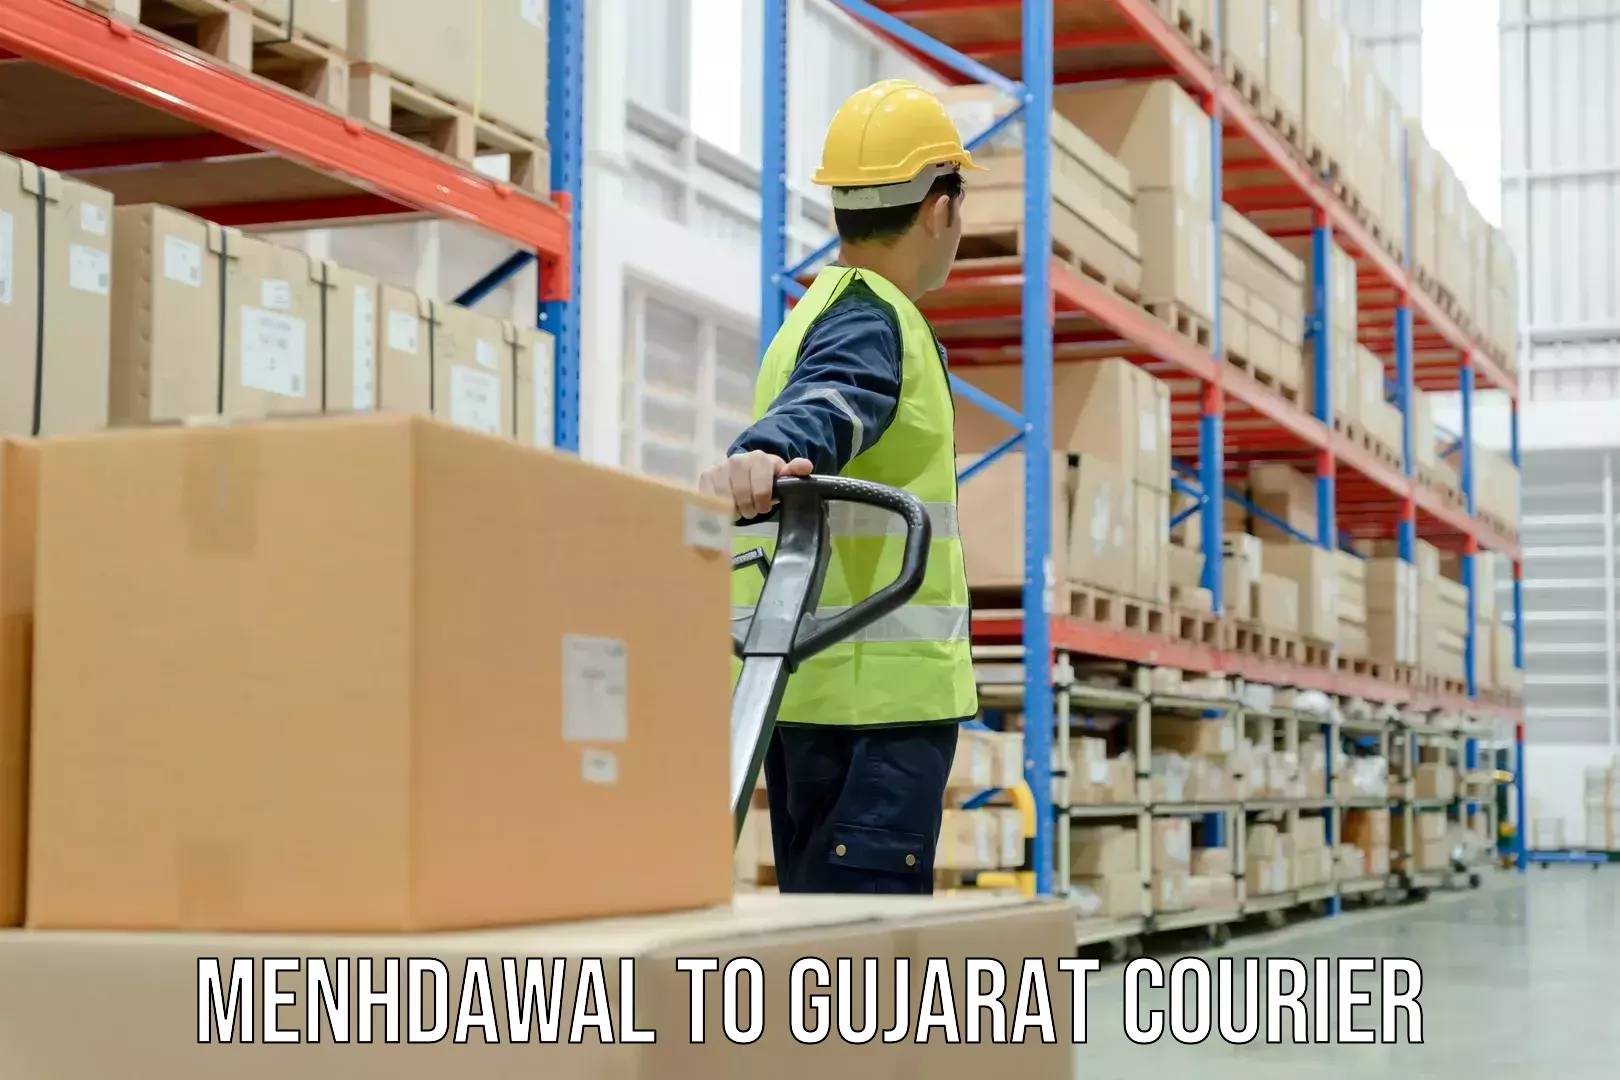 Courier service comparison Menhdawal to Rajkot